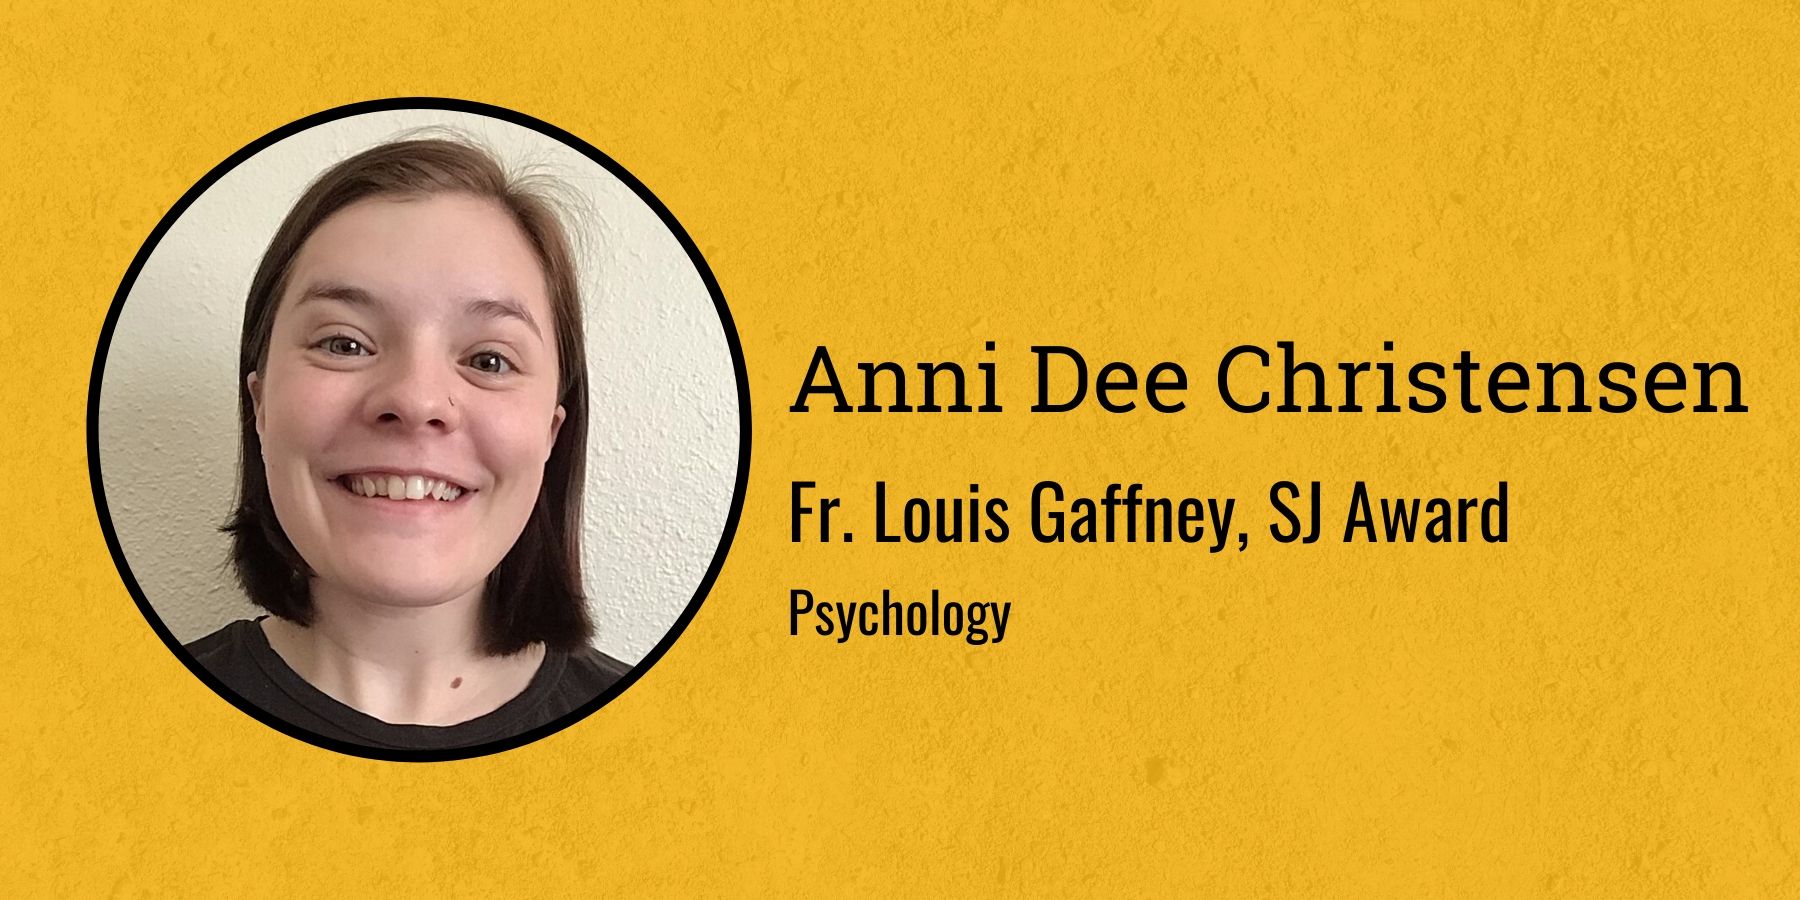 Photo of Anni Dee Christensen and Text: Fr. Louis Gaffney SJ Award, Psychology